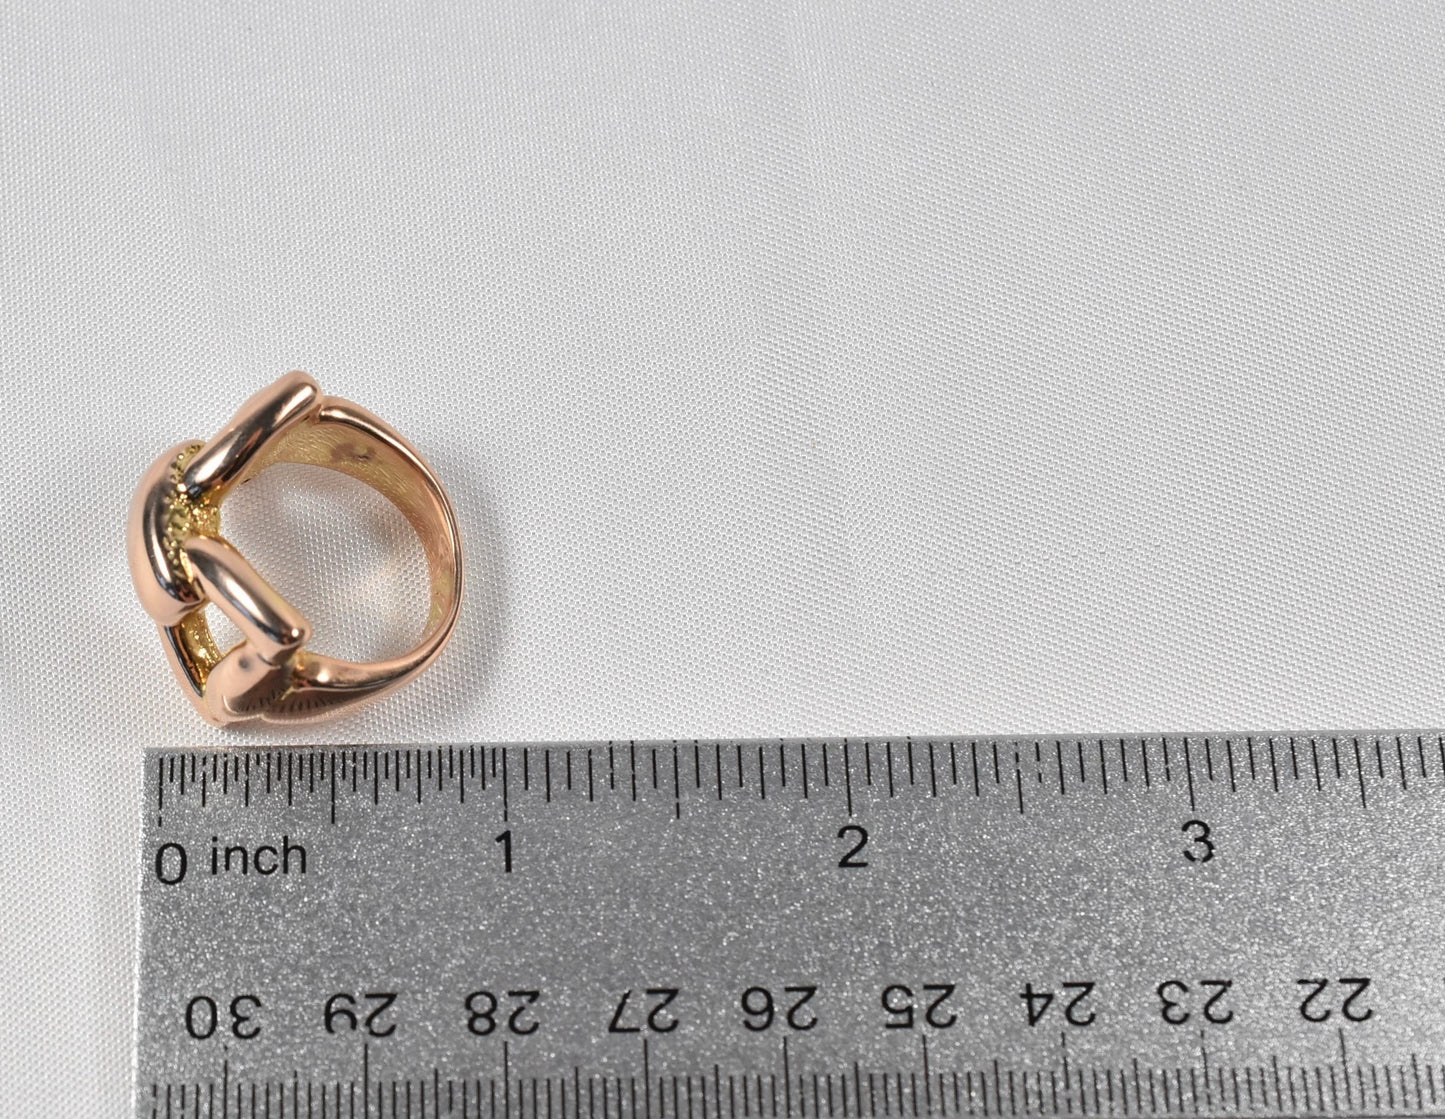 Burdick Co. 14k Rose Gold Bow Ring, Size 8 - 4.2g